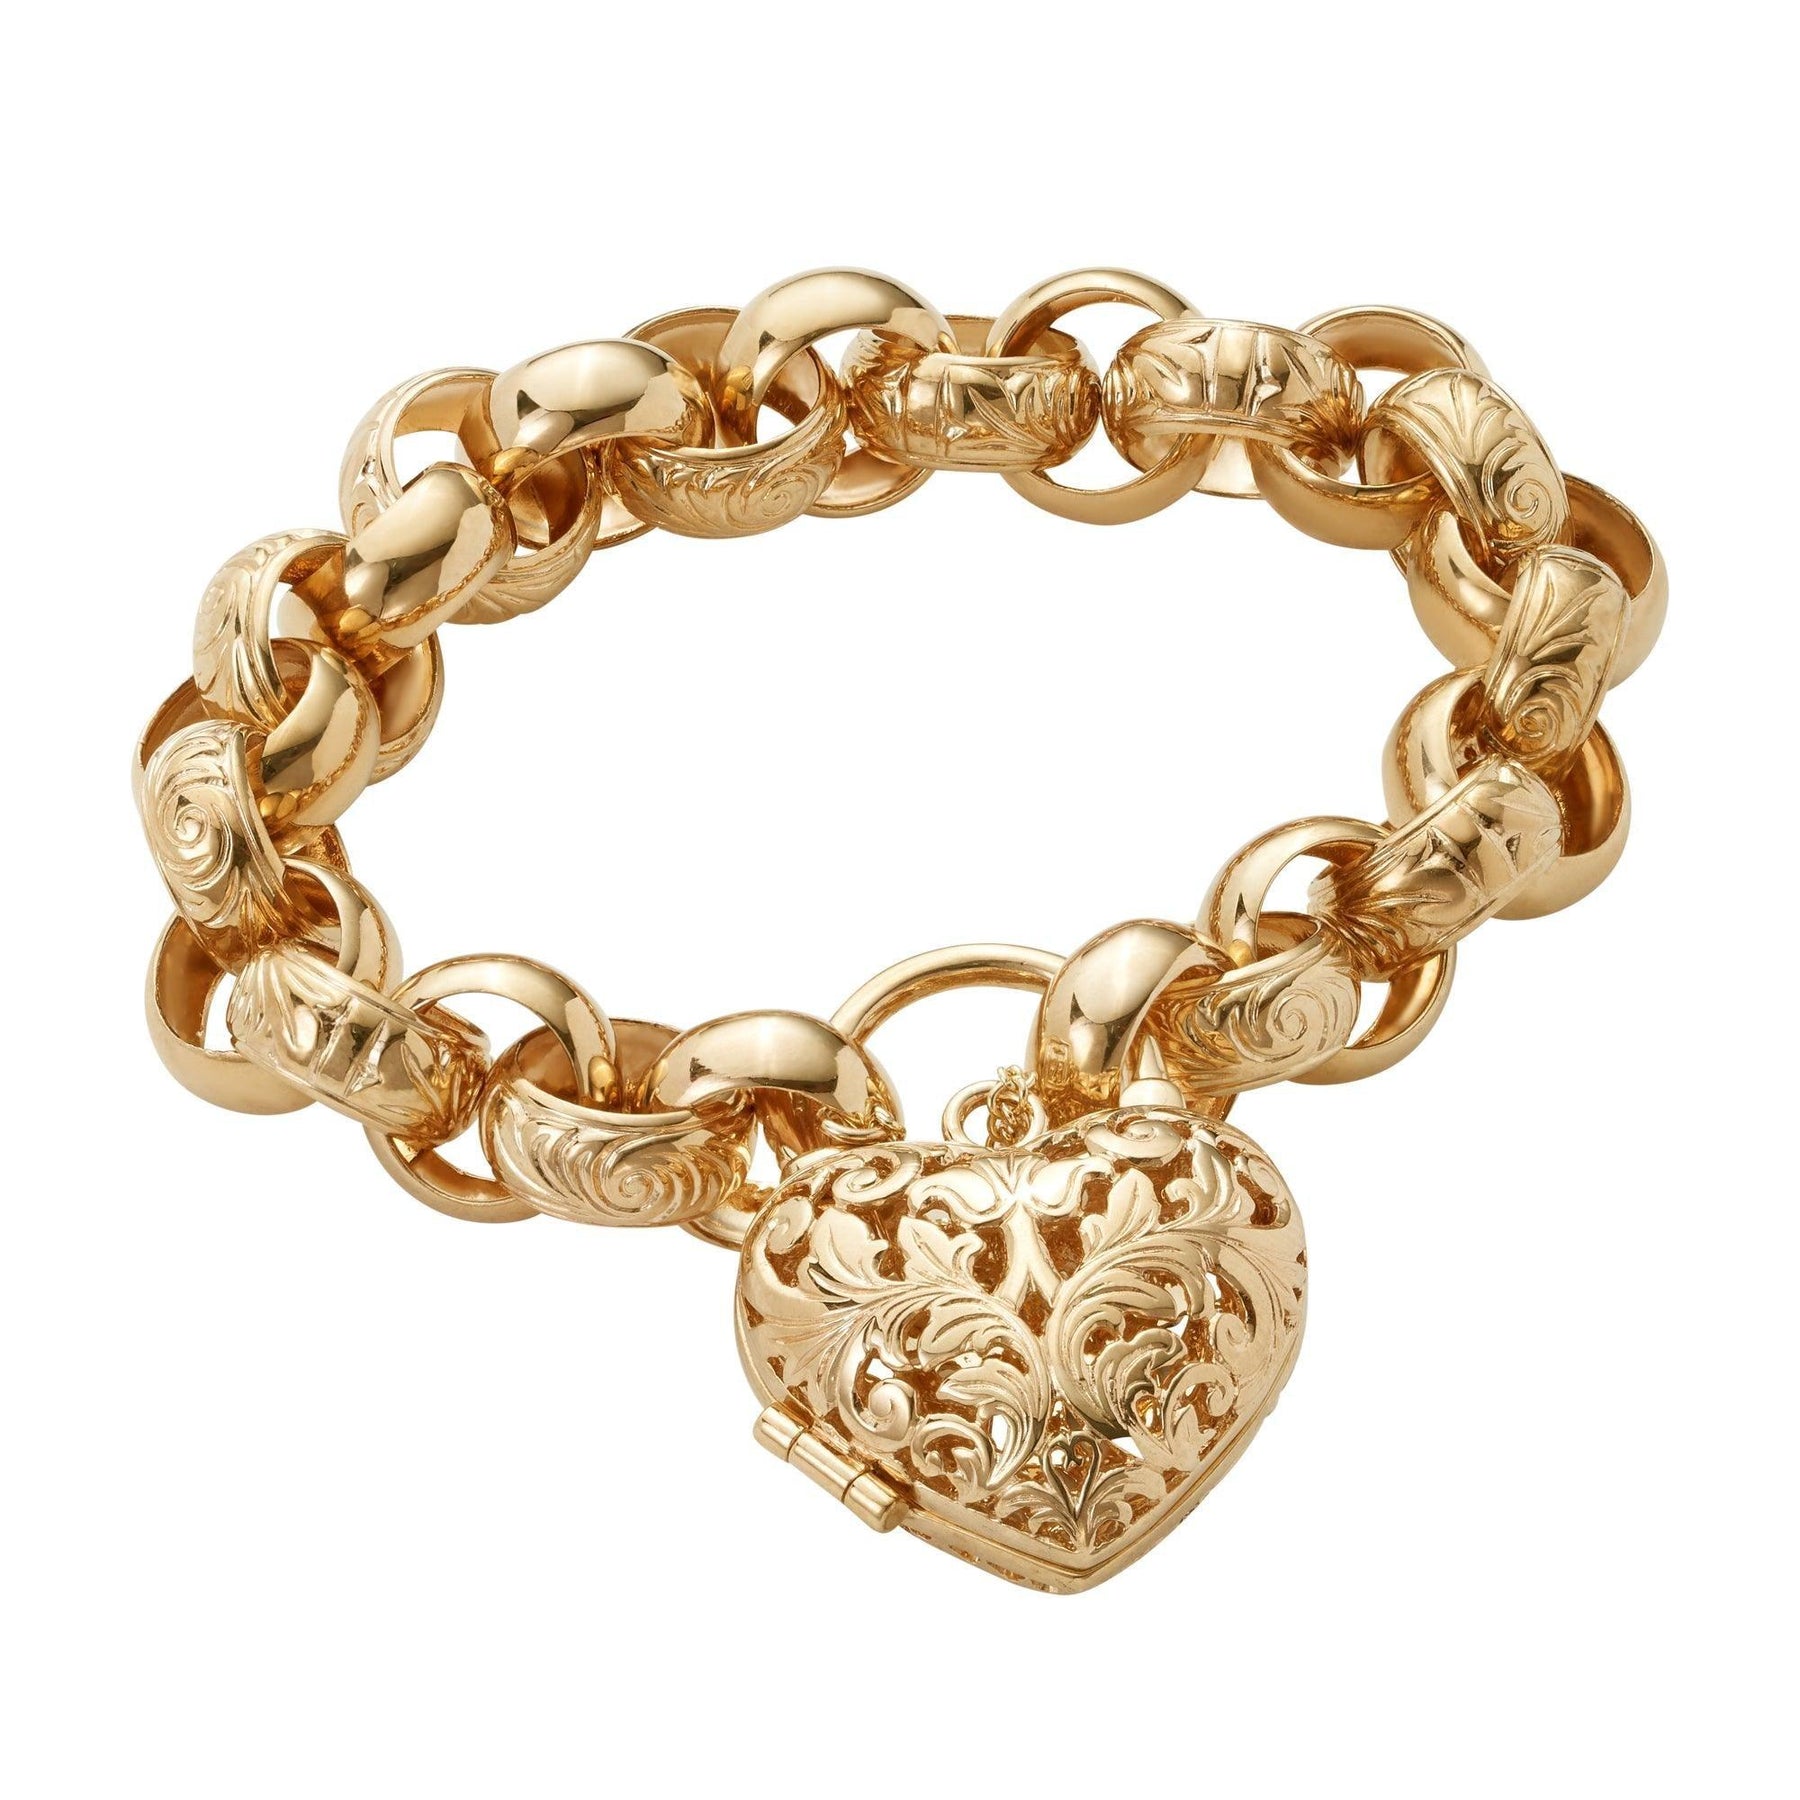 9ct Gold Turquoise Bracelet – Karen Morrison Jewellery